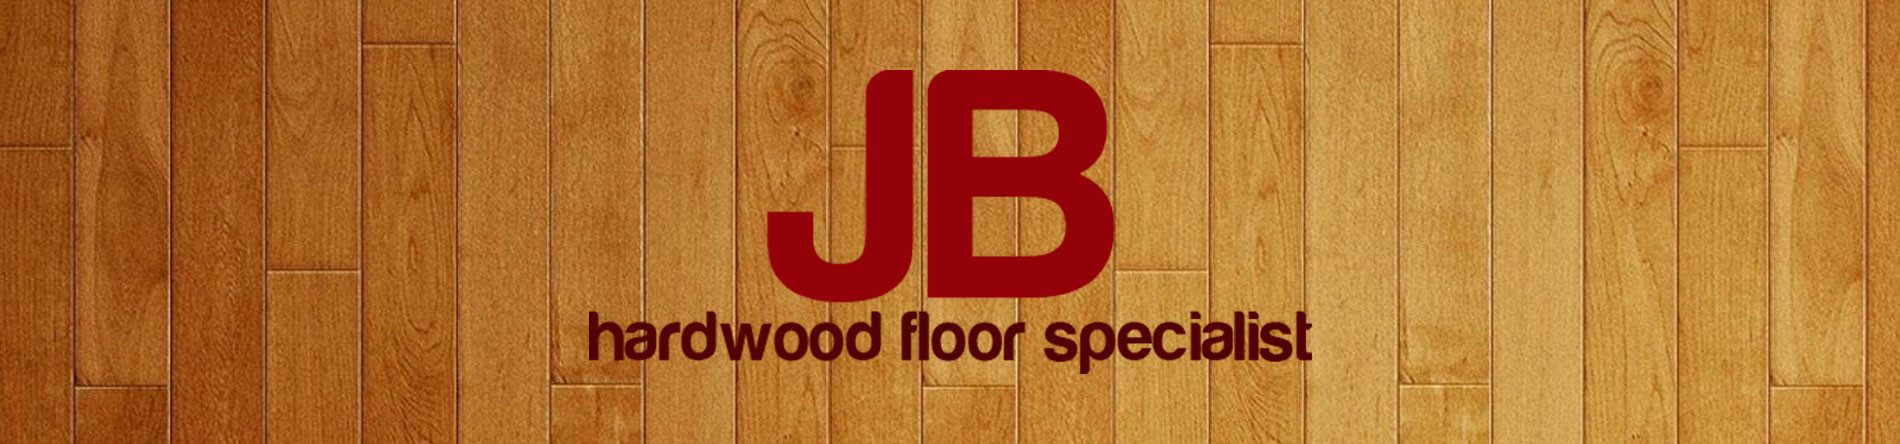 19 attractive Jb Hardwood Floors 2024 free download jb hardwood floors of jb hardwood floor specialist is a custom flooring company in san intended for jb hardwood floor specialist is a custom flooring company in san bruno ca